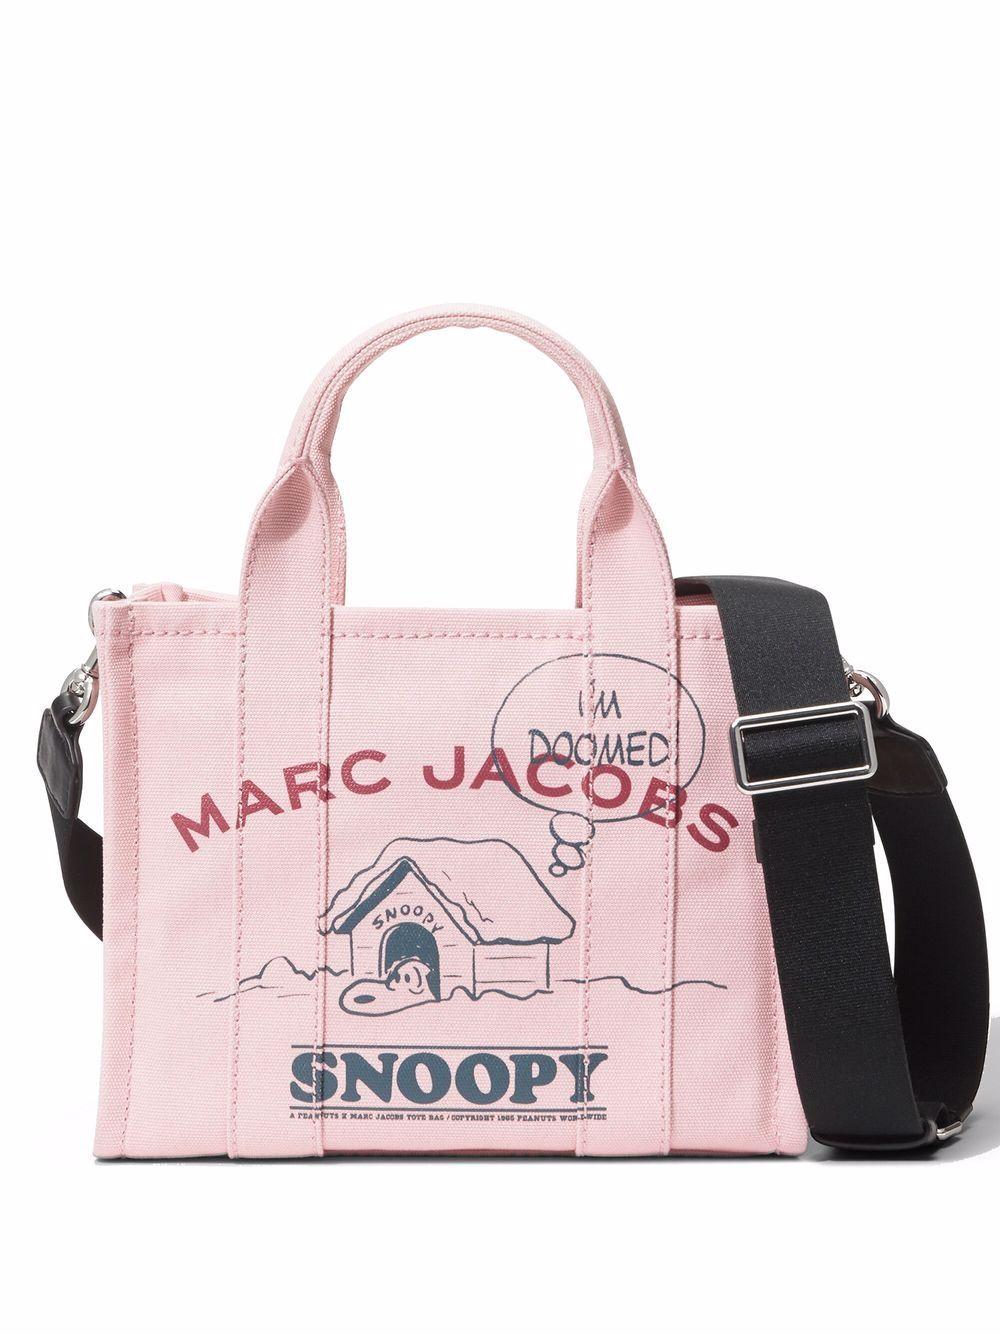 Marc Jacobs X Peanuts The Mini Snoopy Handtasche in Pink | Lyst DE